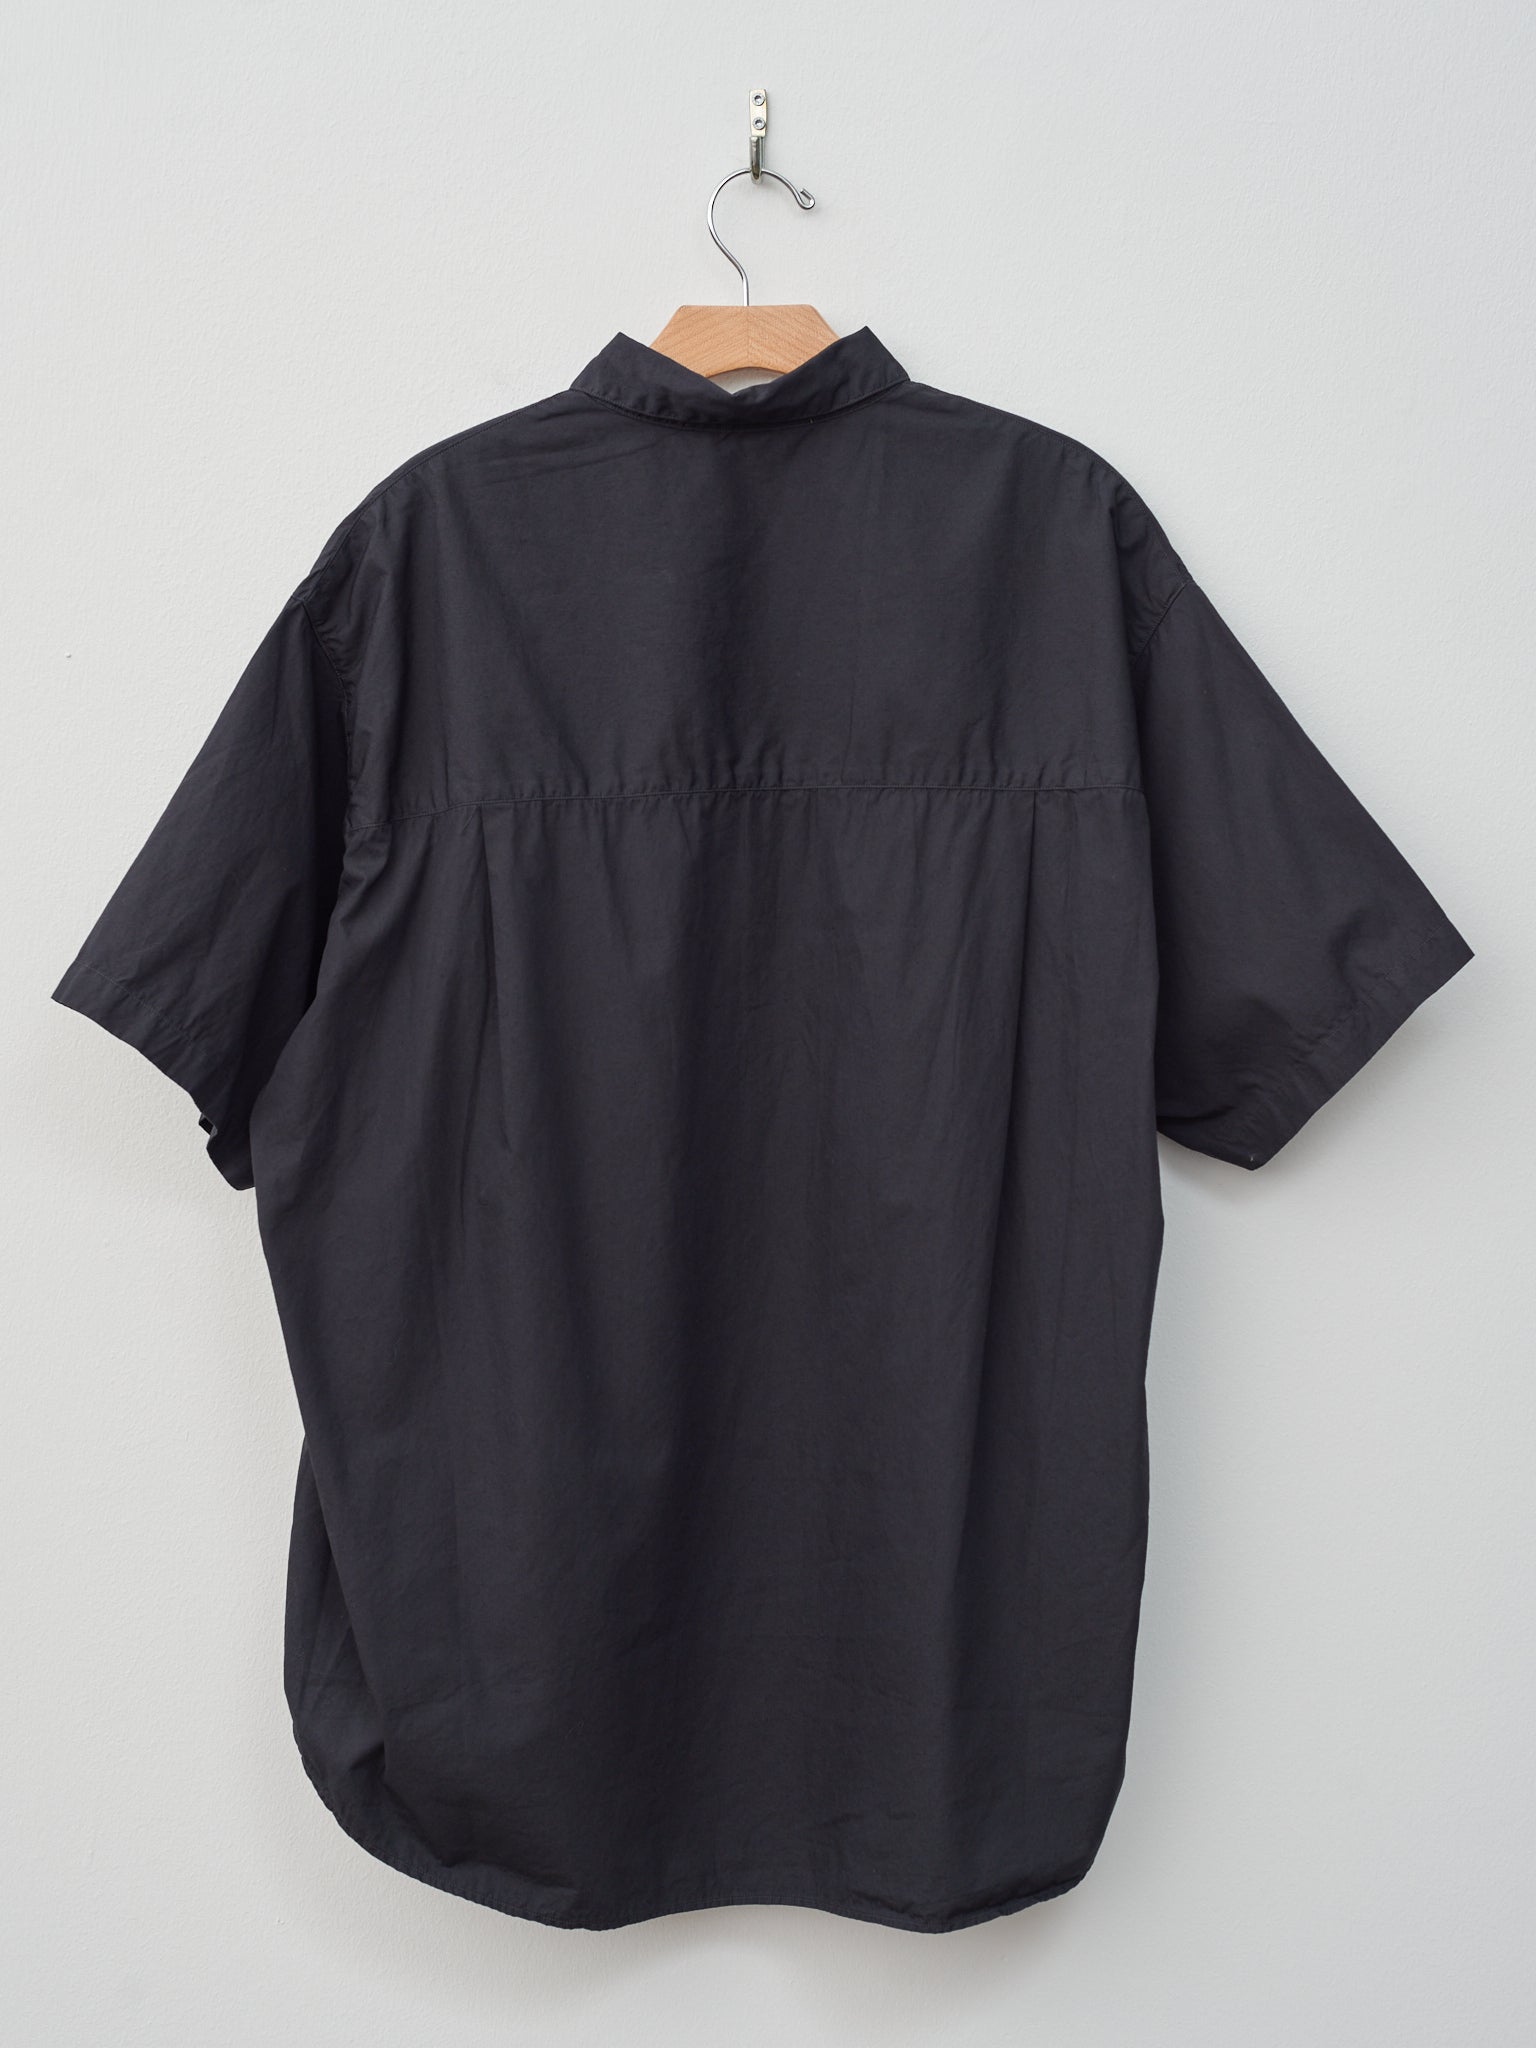 Namu Shop - Veritecoeur Half Sleeve Big Shirt - Charcoal